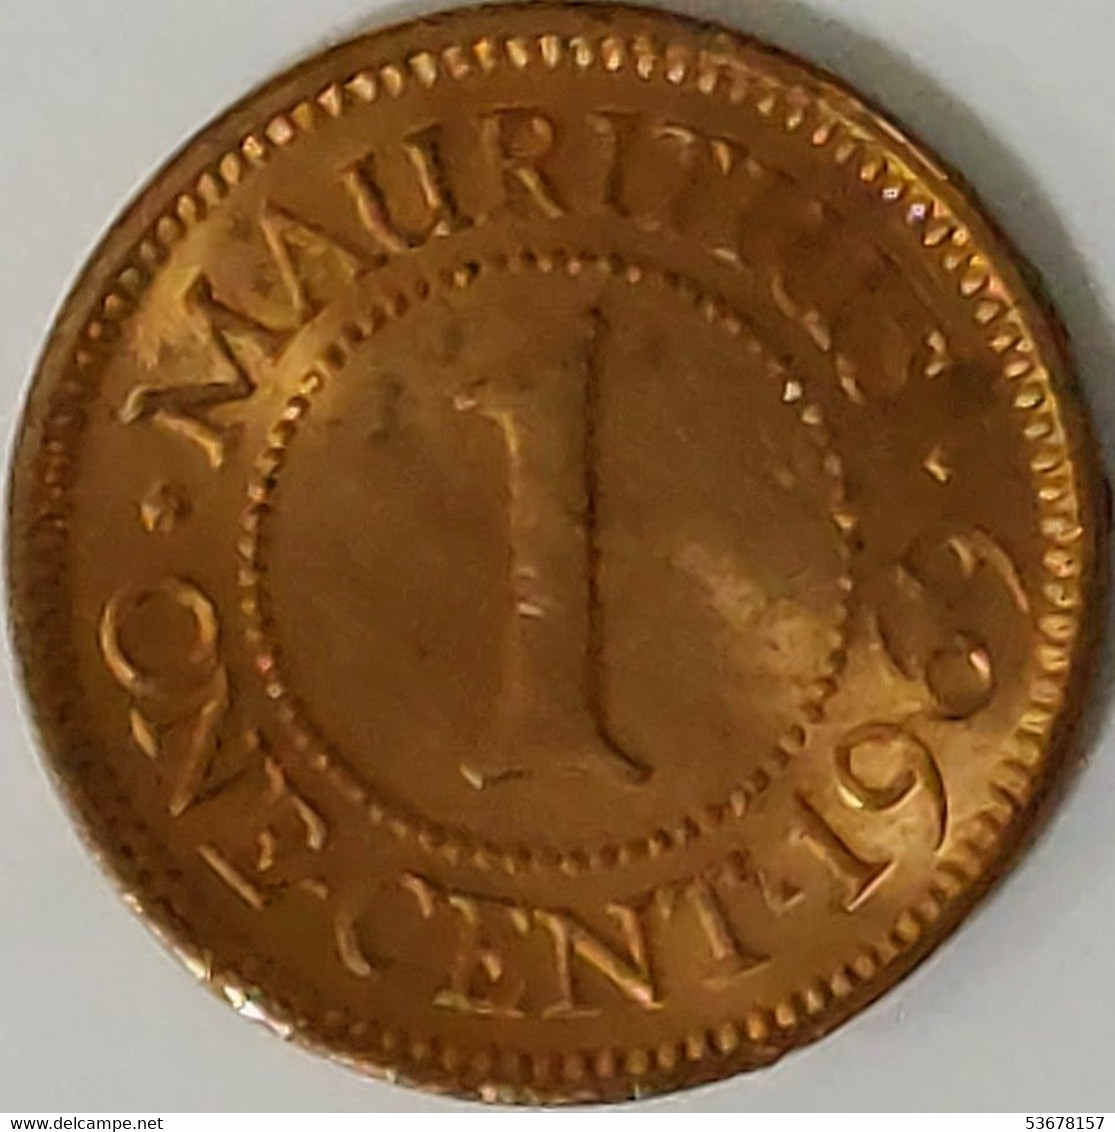 Mauritius - 1 Cent 1969, KM# 31 (#1515) - Maurice